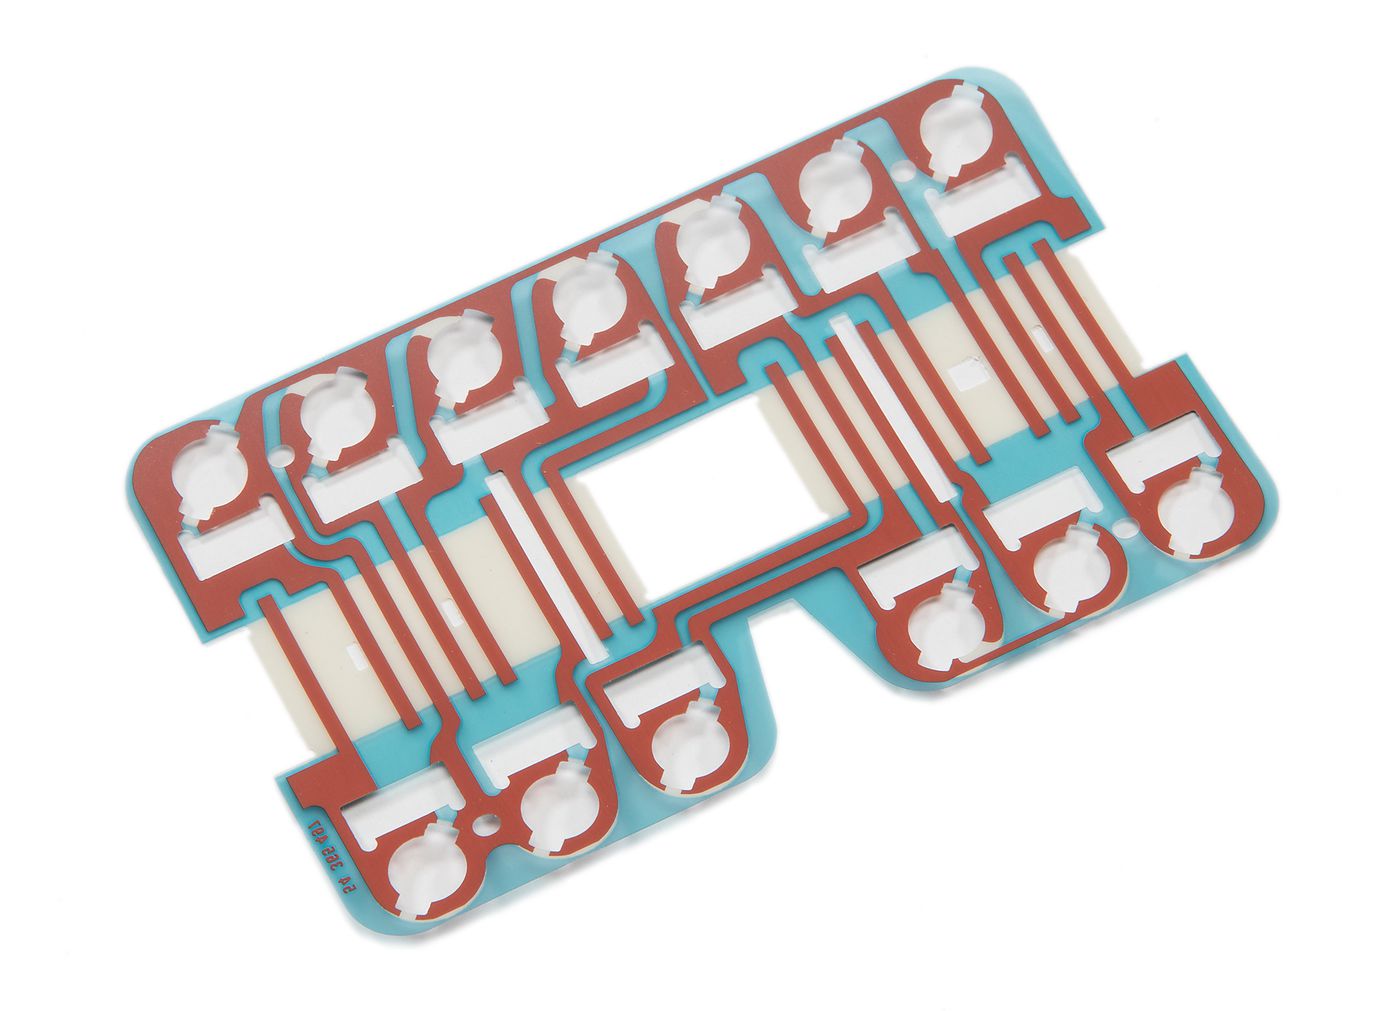 Gedruckte Leiterplatte
Printed circuit board
Platine de circuit 